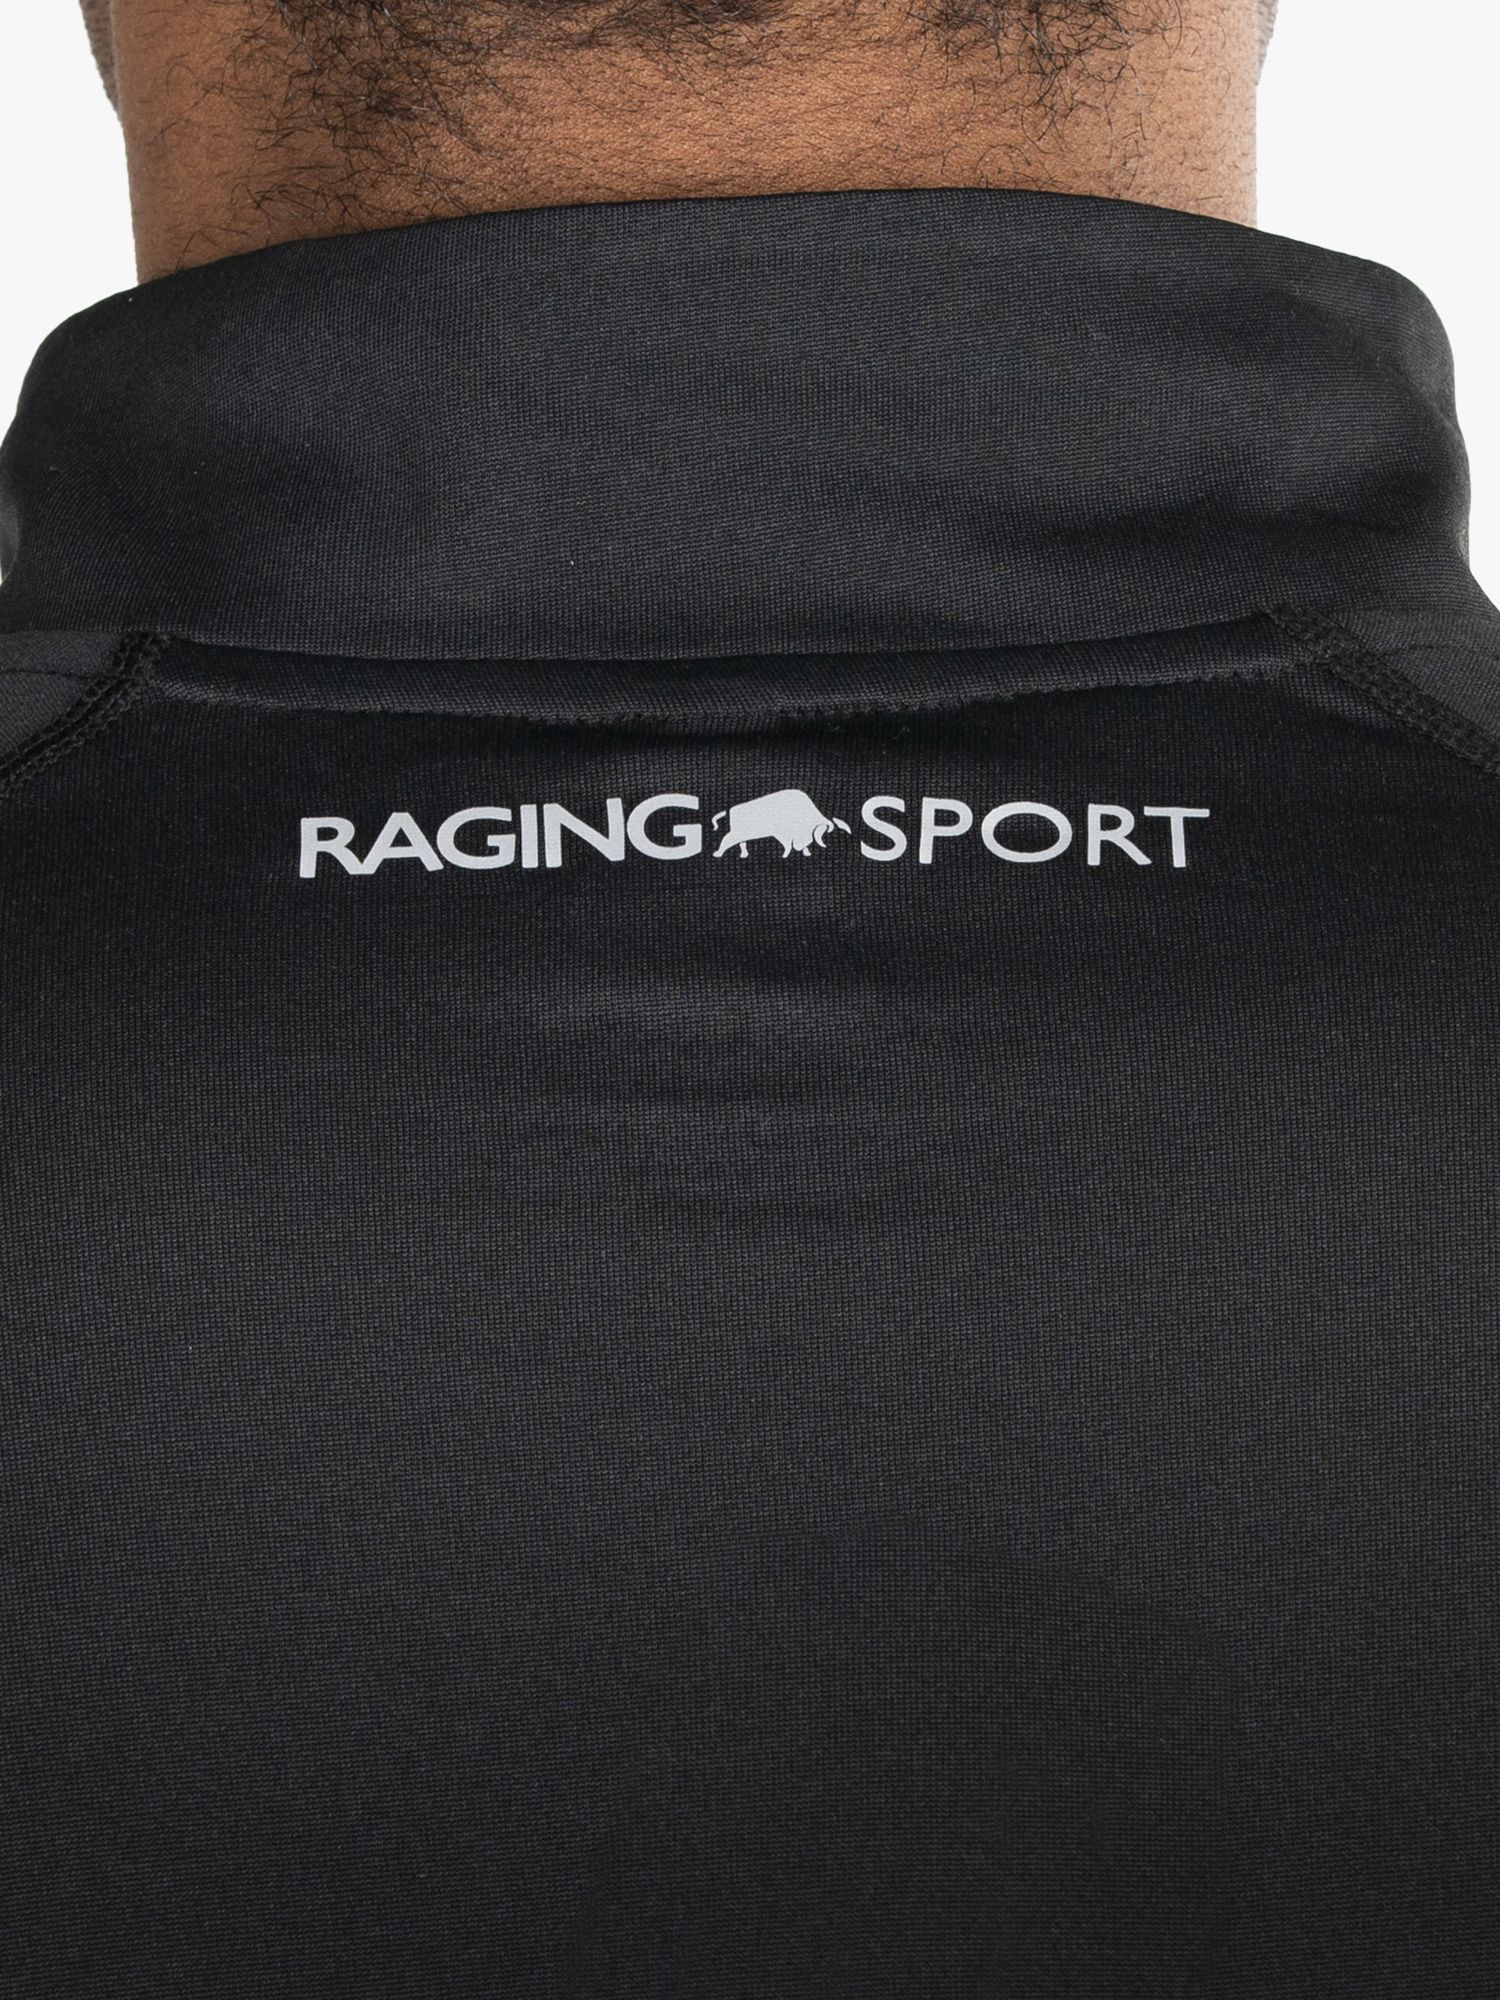 Raging Bull Performance 1/4 Zip Long Sleeve Gym Top, Black, S